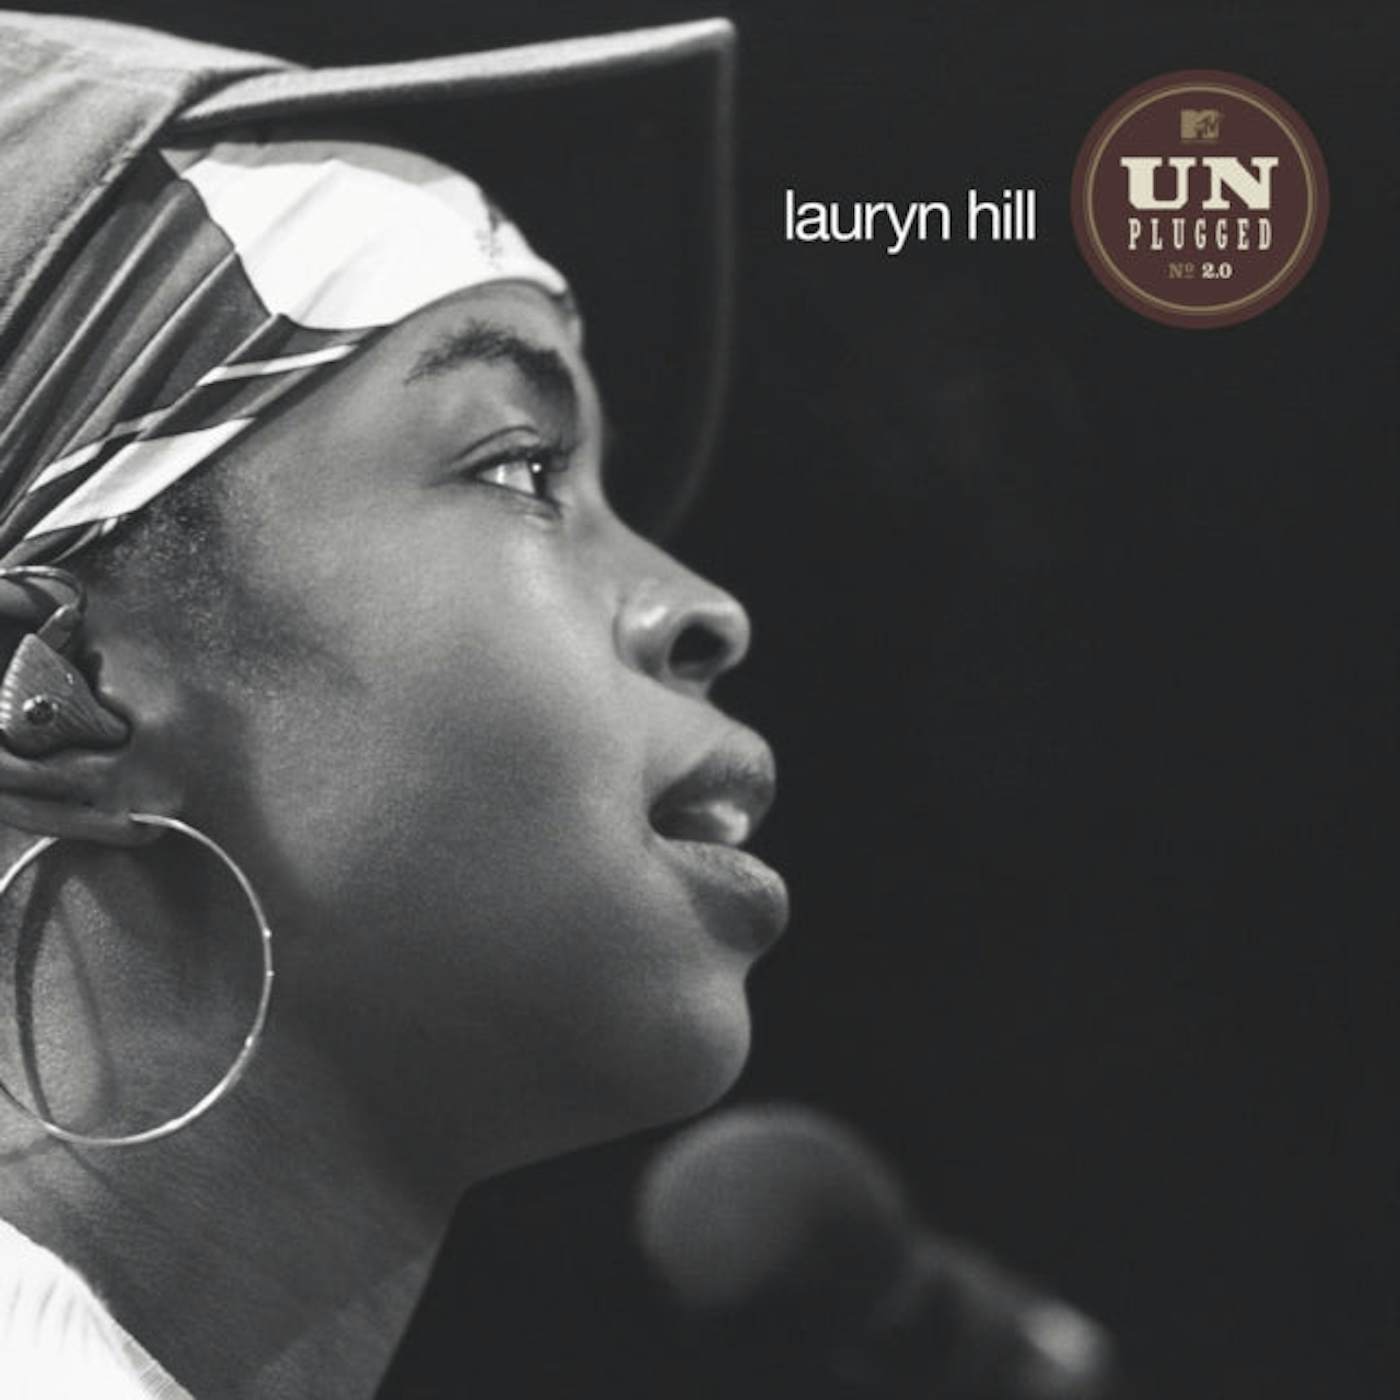 Lauryn Hill LP - Mtv Unplugged No. 2.0 (Vinyl)